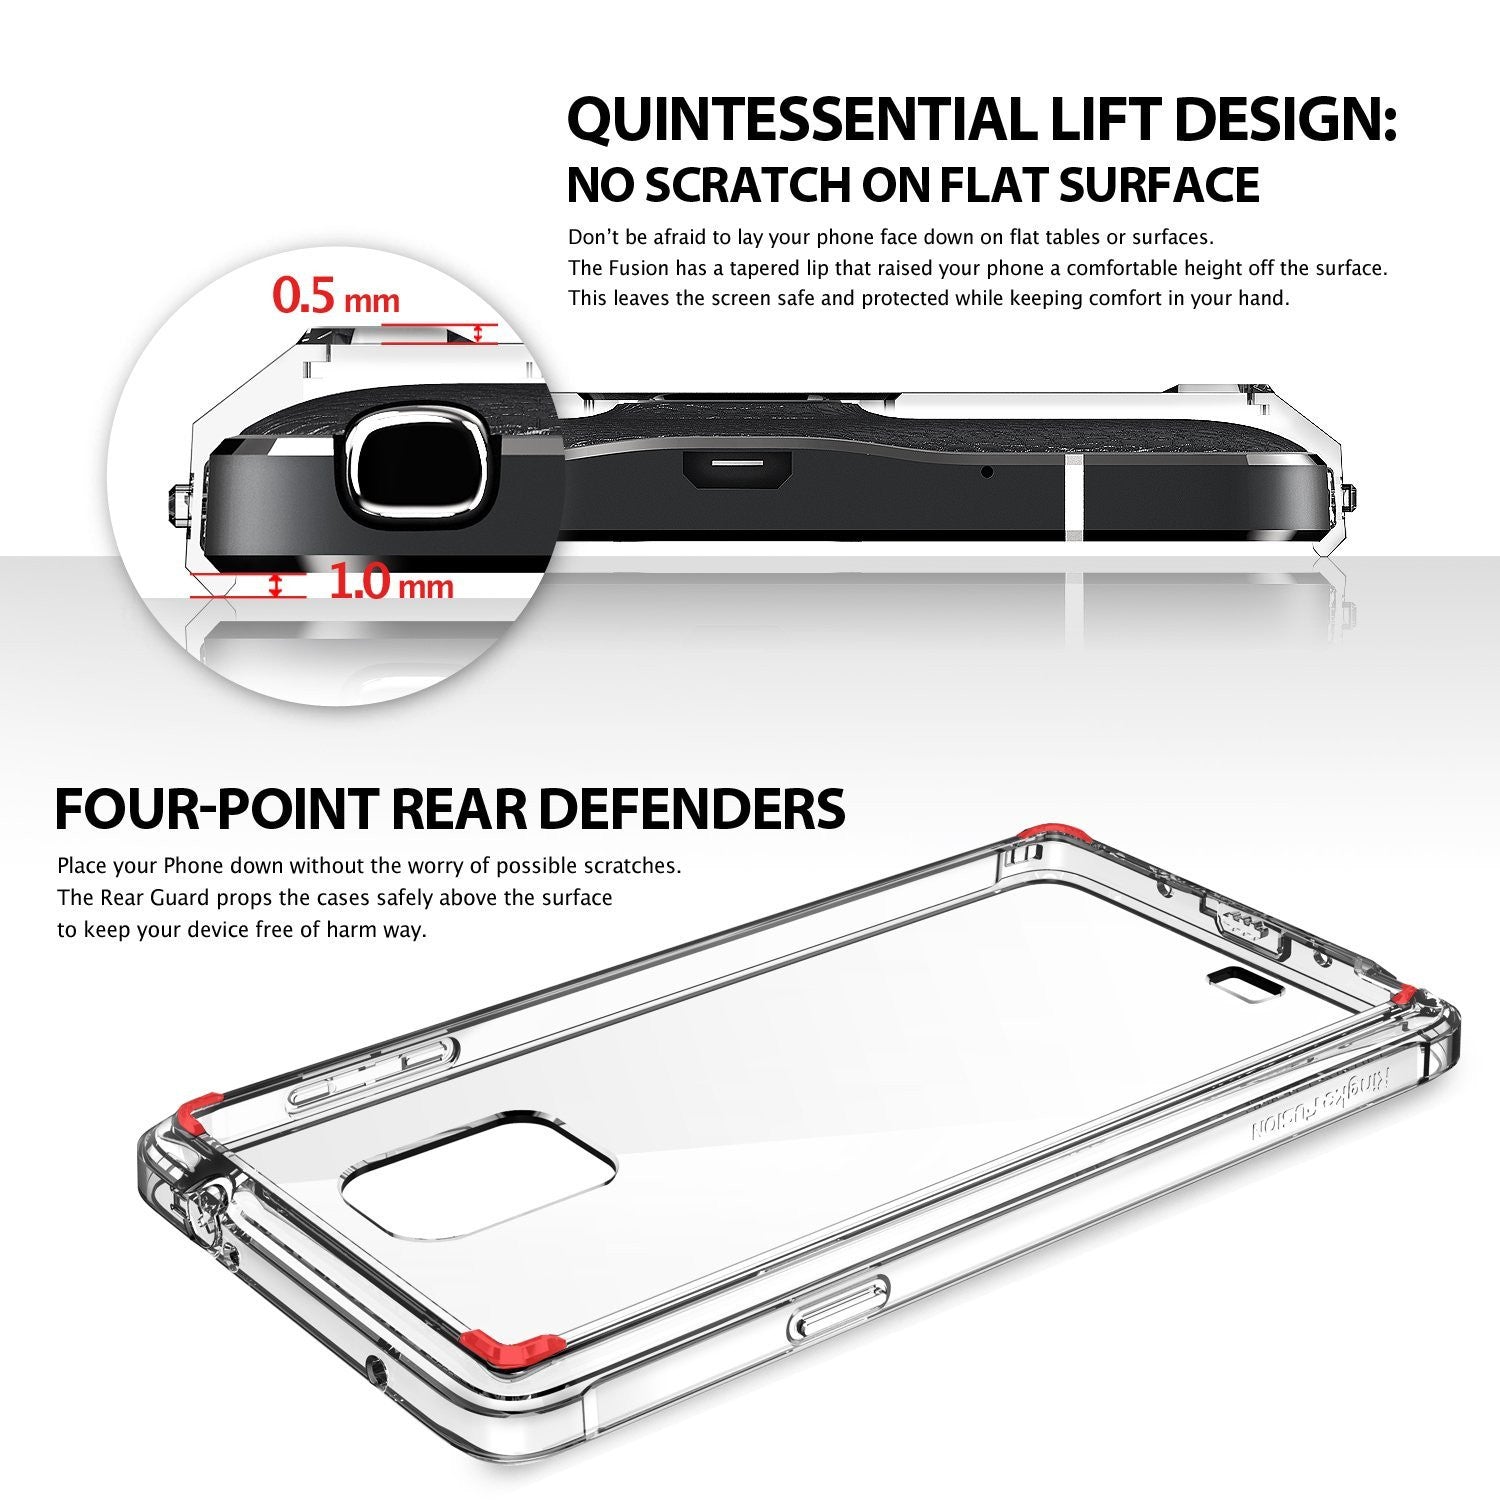 Galaxy Note 4 Case | Fusion